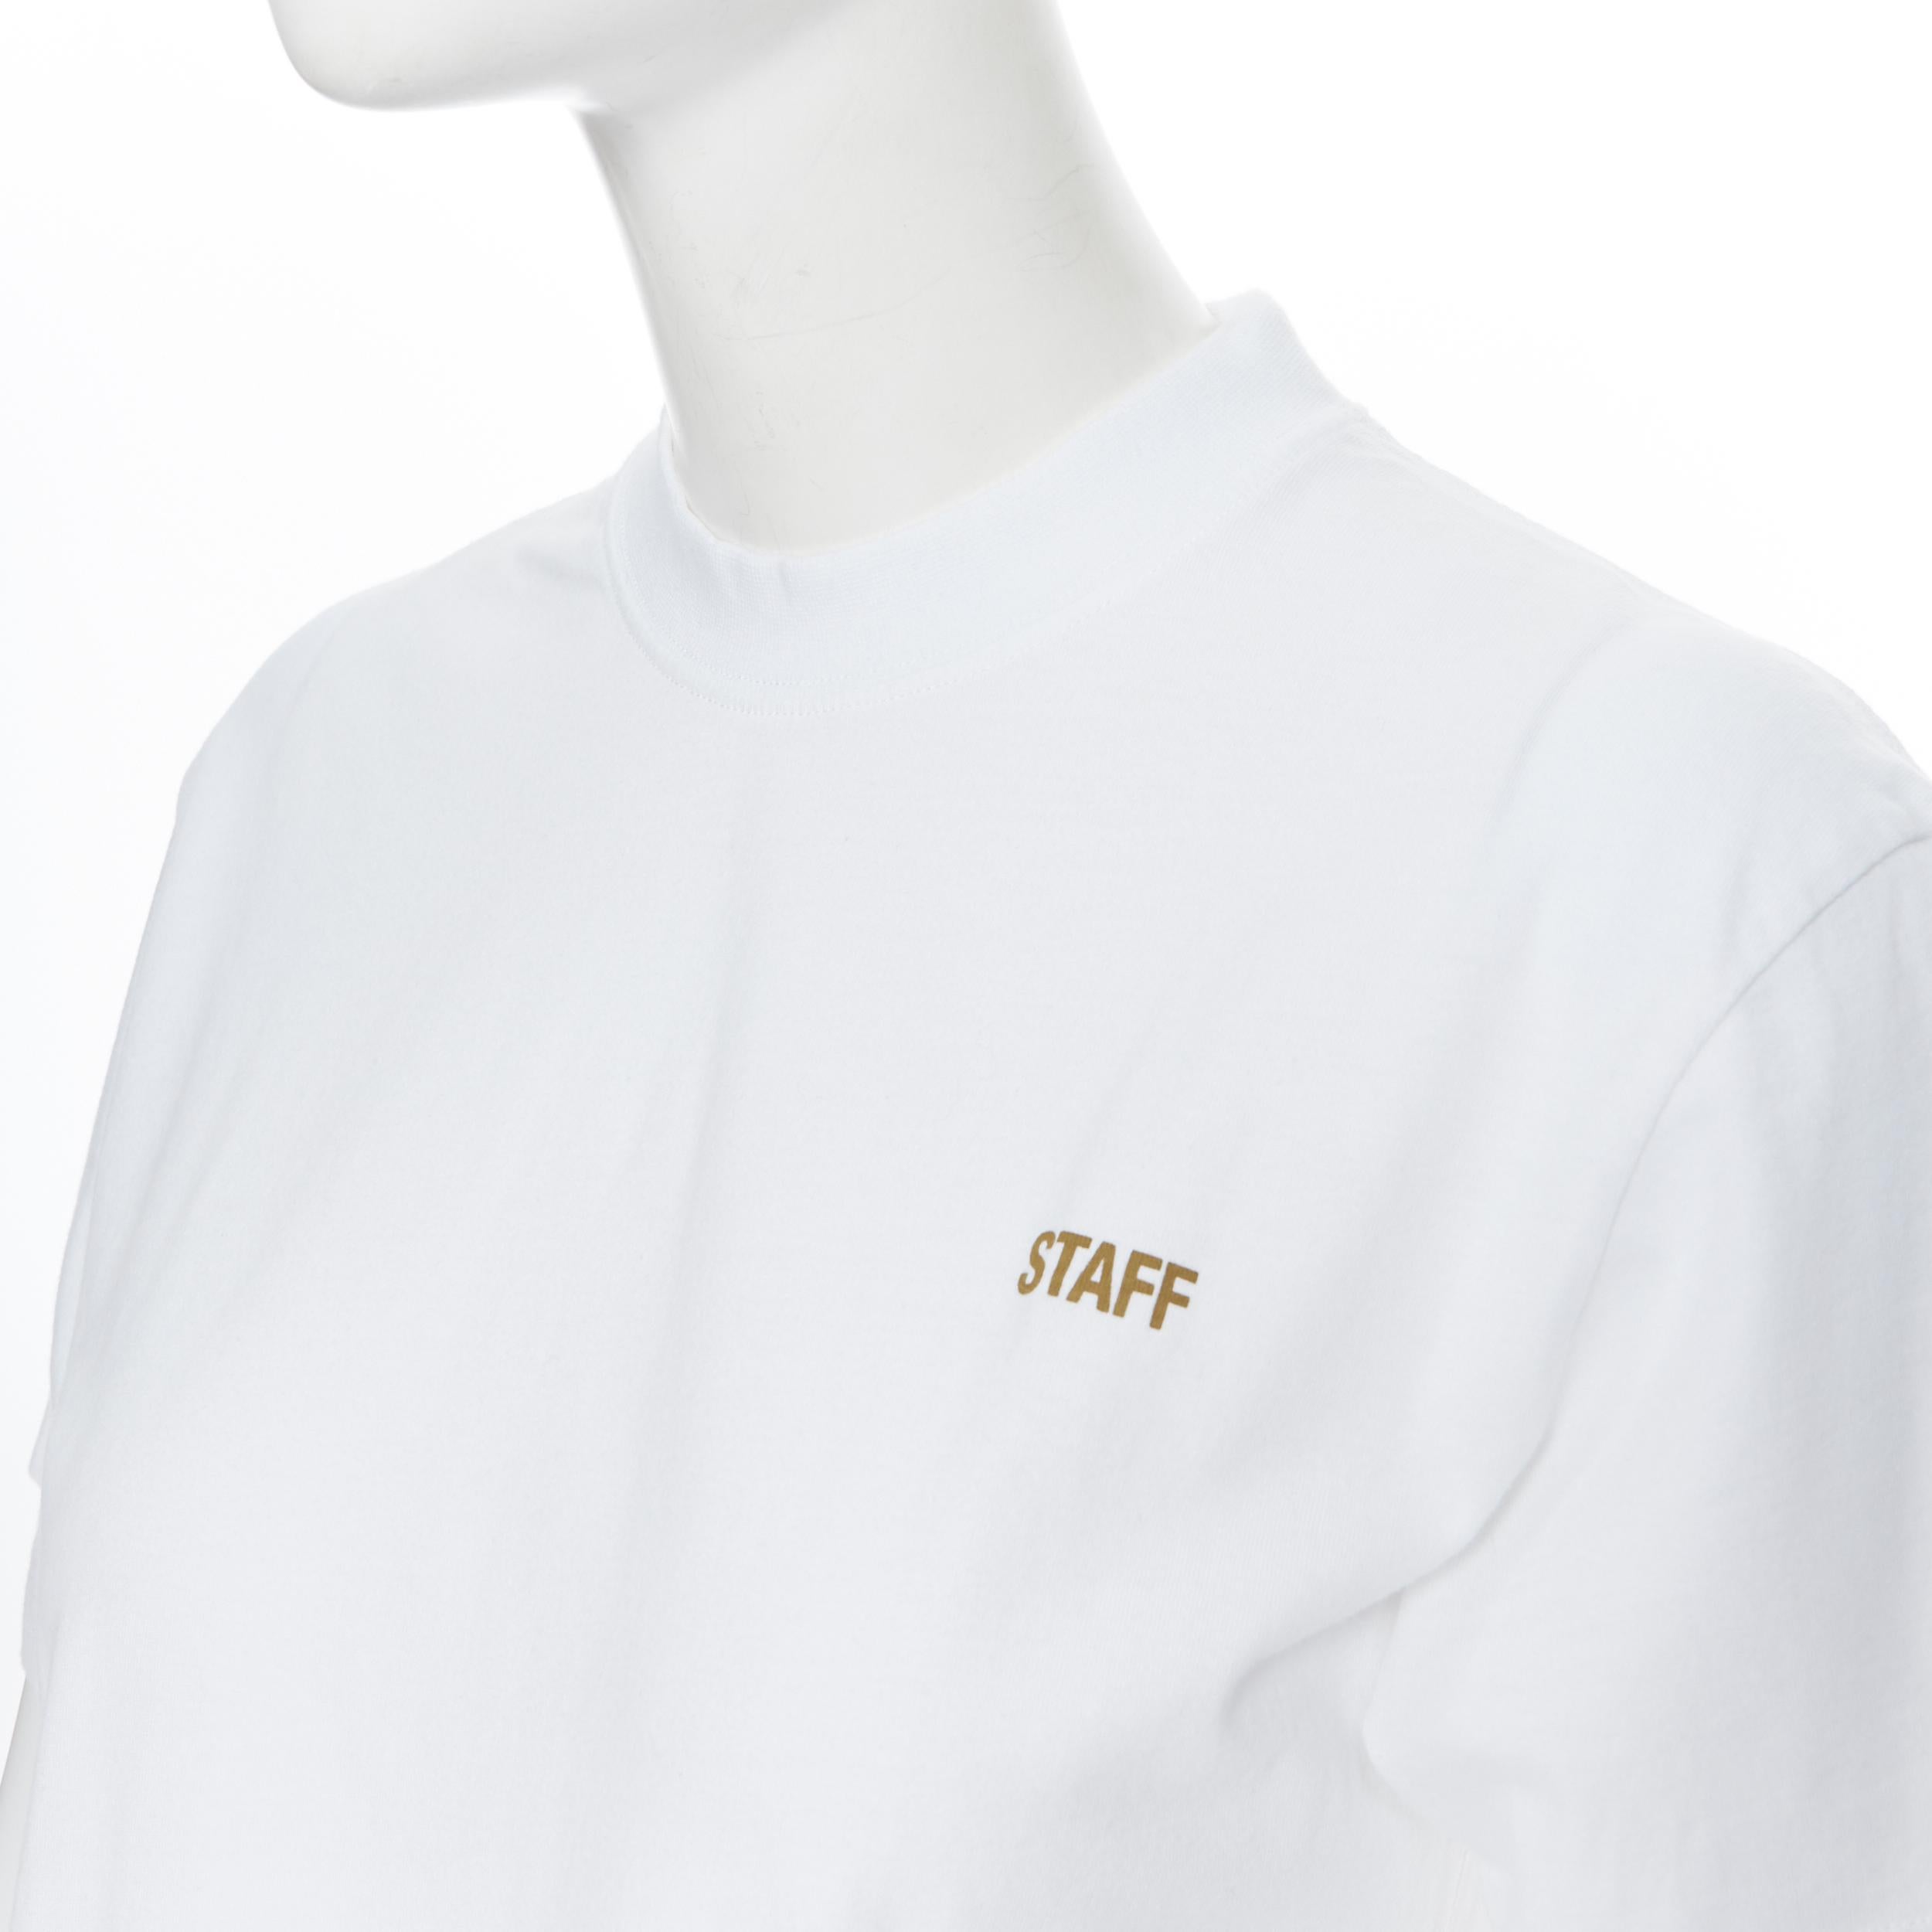 Women's VETEMENTS AW18 gold STAFF logo print short sleeve t-shirt XS